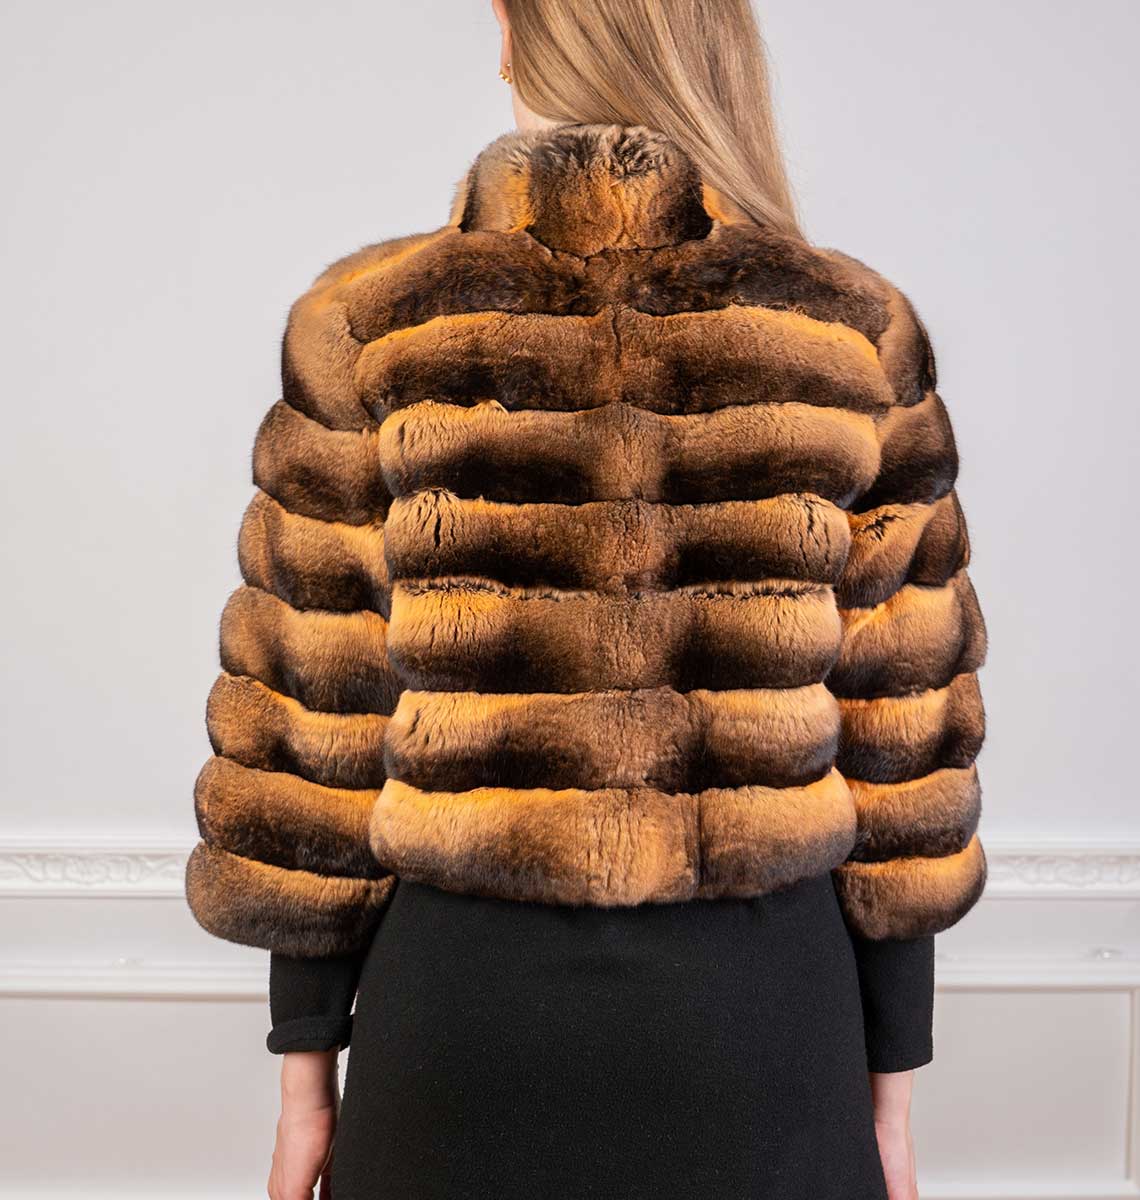 Finest chinchilla fur jacket bolero in gold tone seen from the back